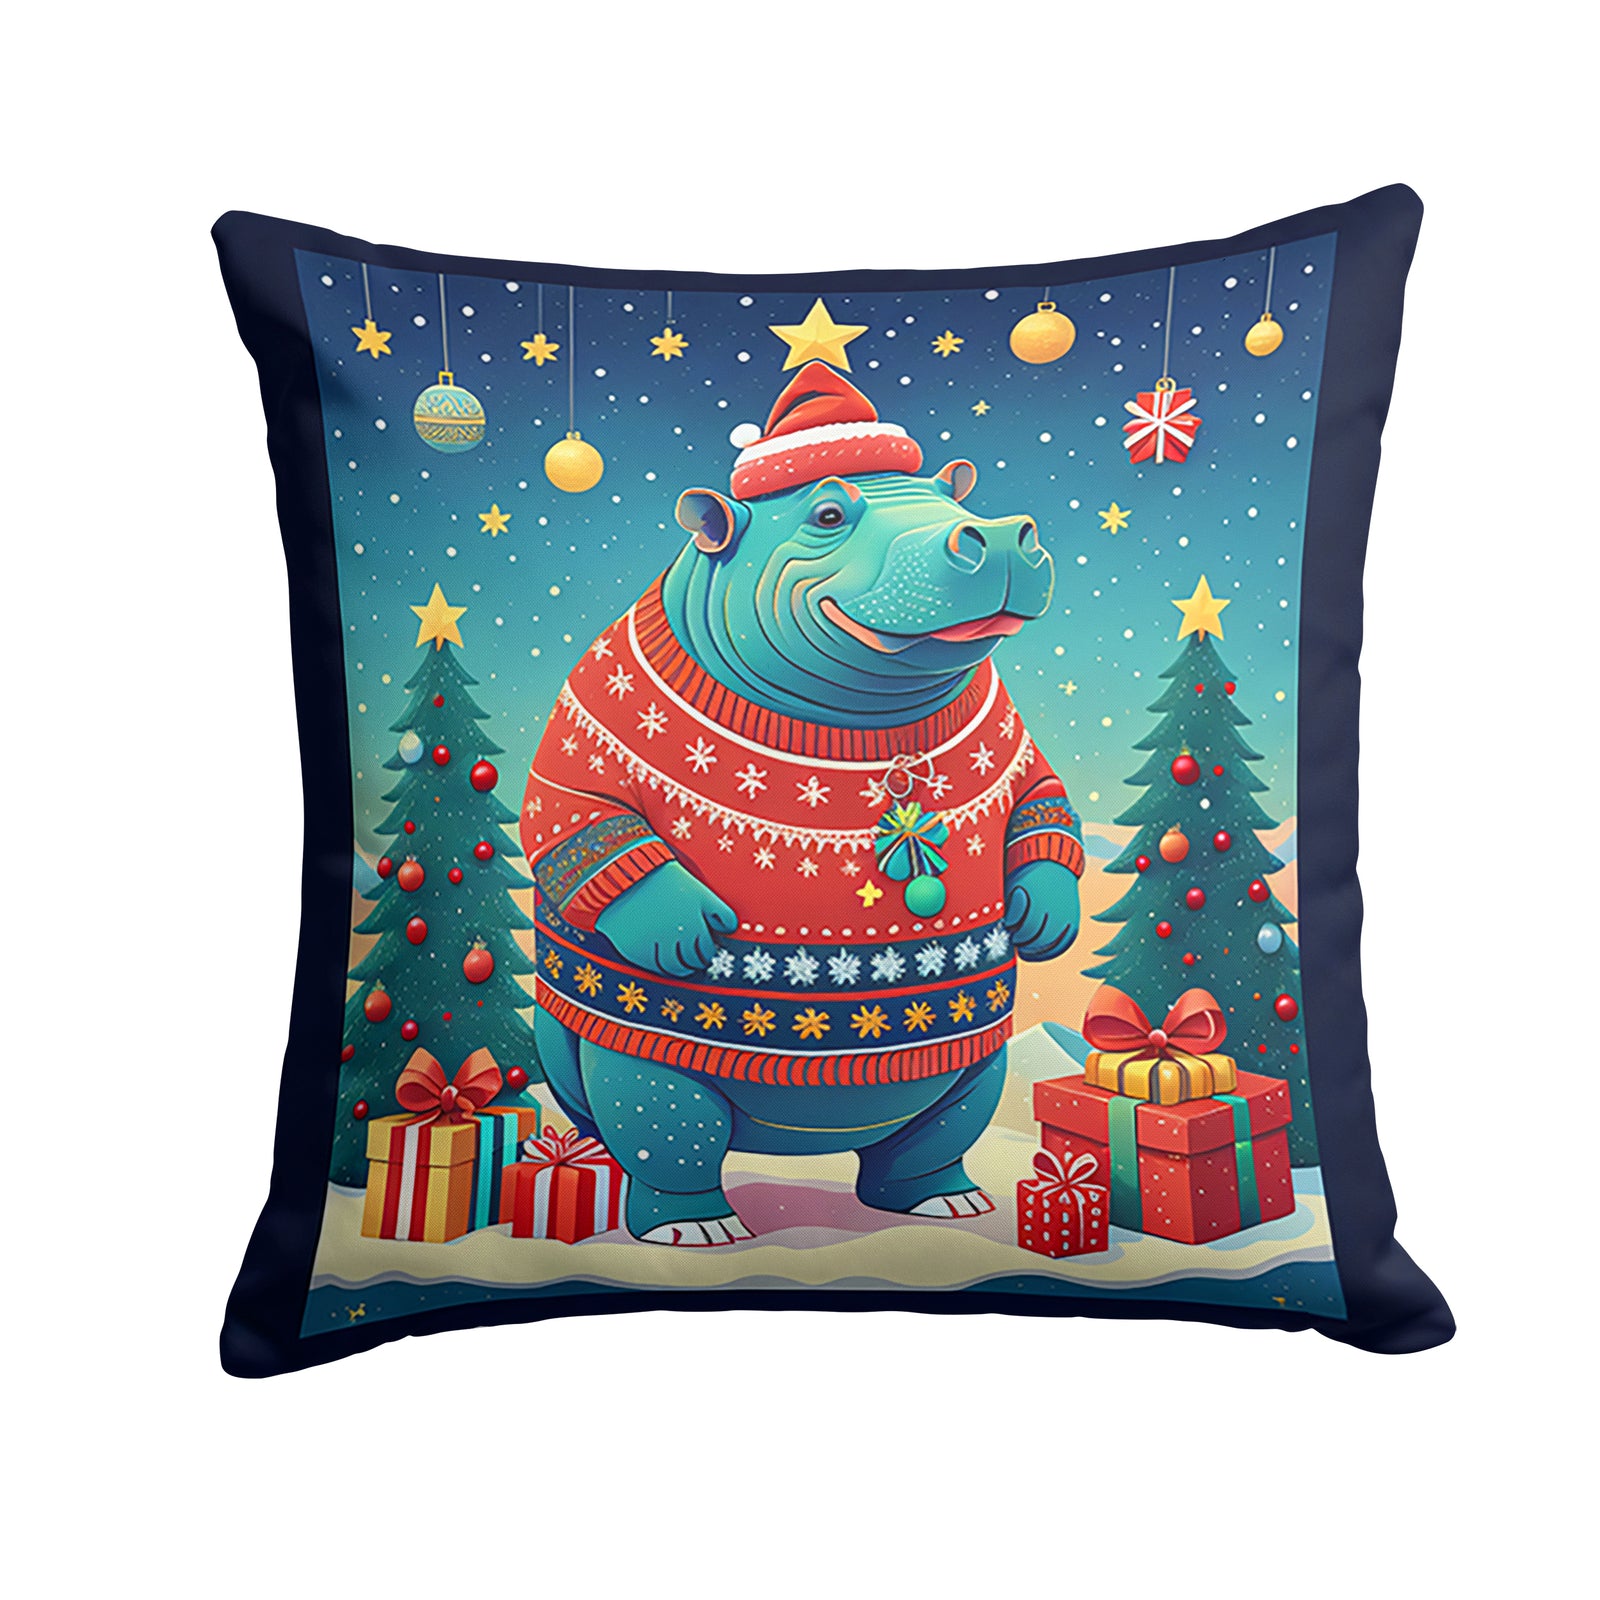 Buy this Hippopotamus Christmas Fabric Decorative Pillow